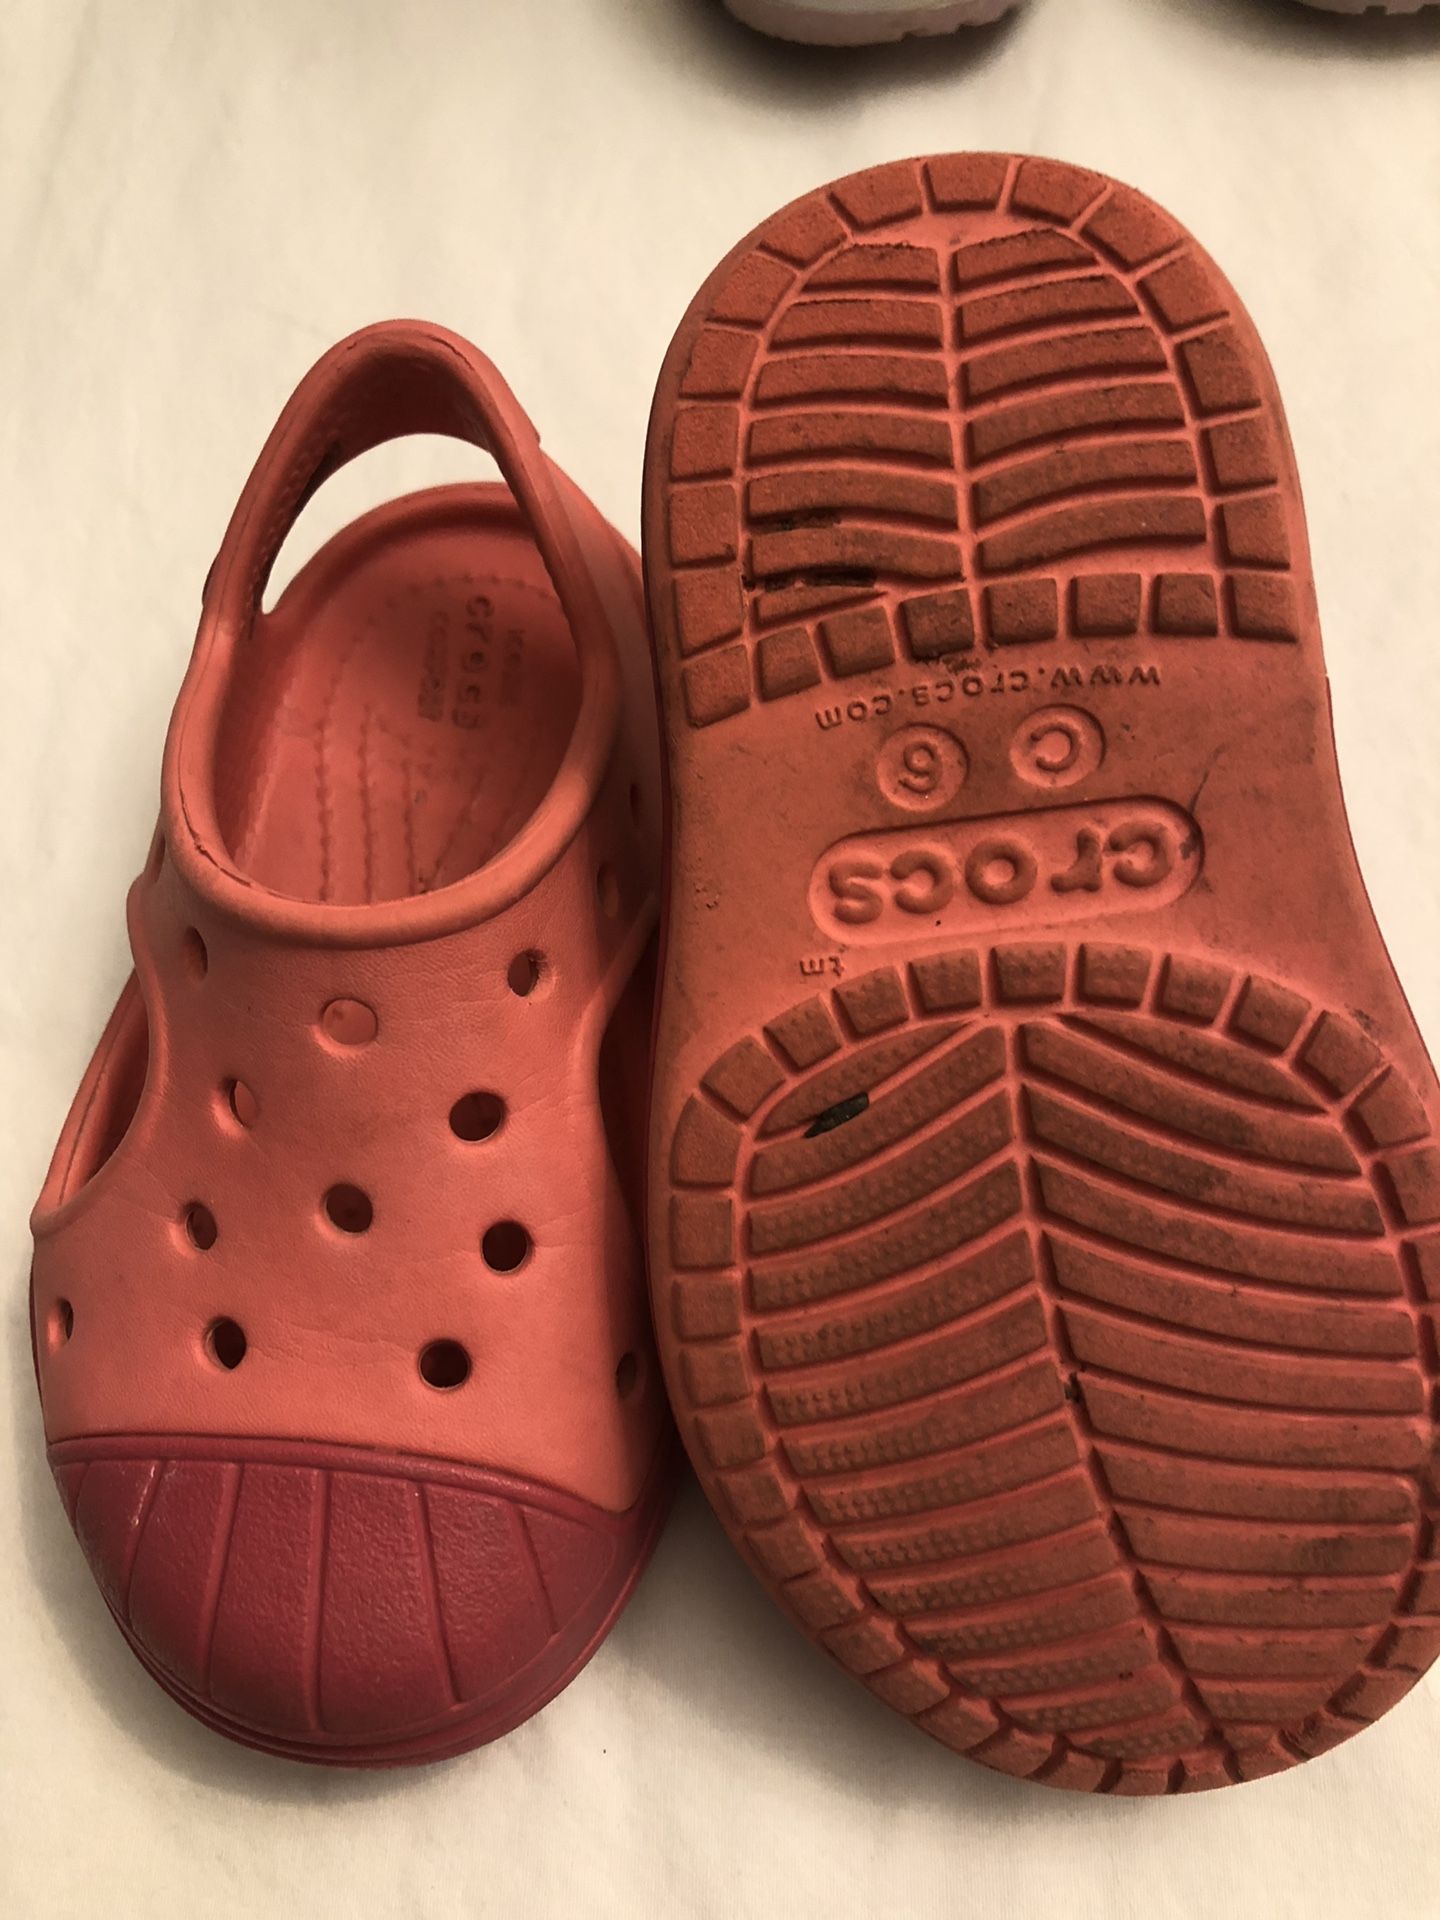 Toddler girls shoes. Size 5 (set of 2 pairs)